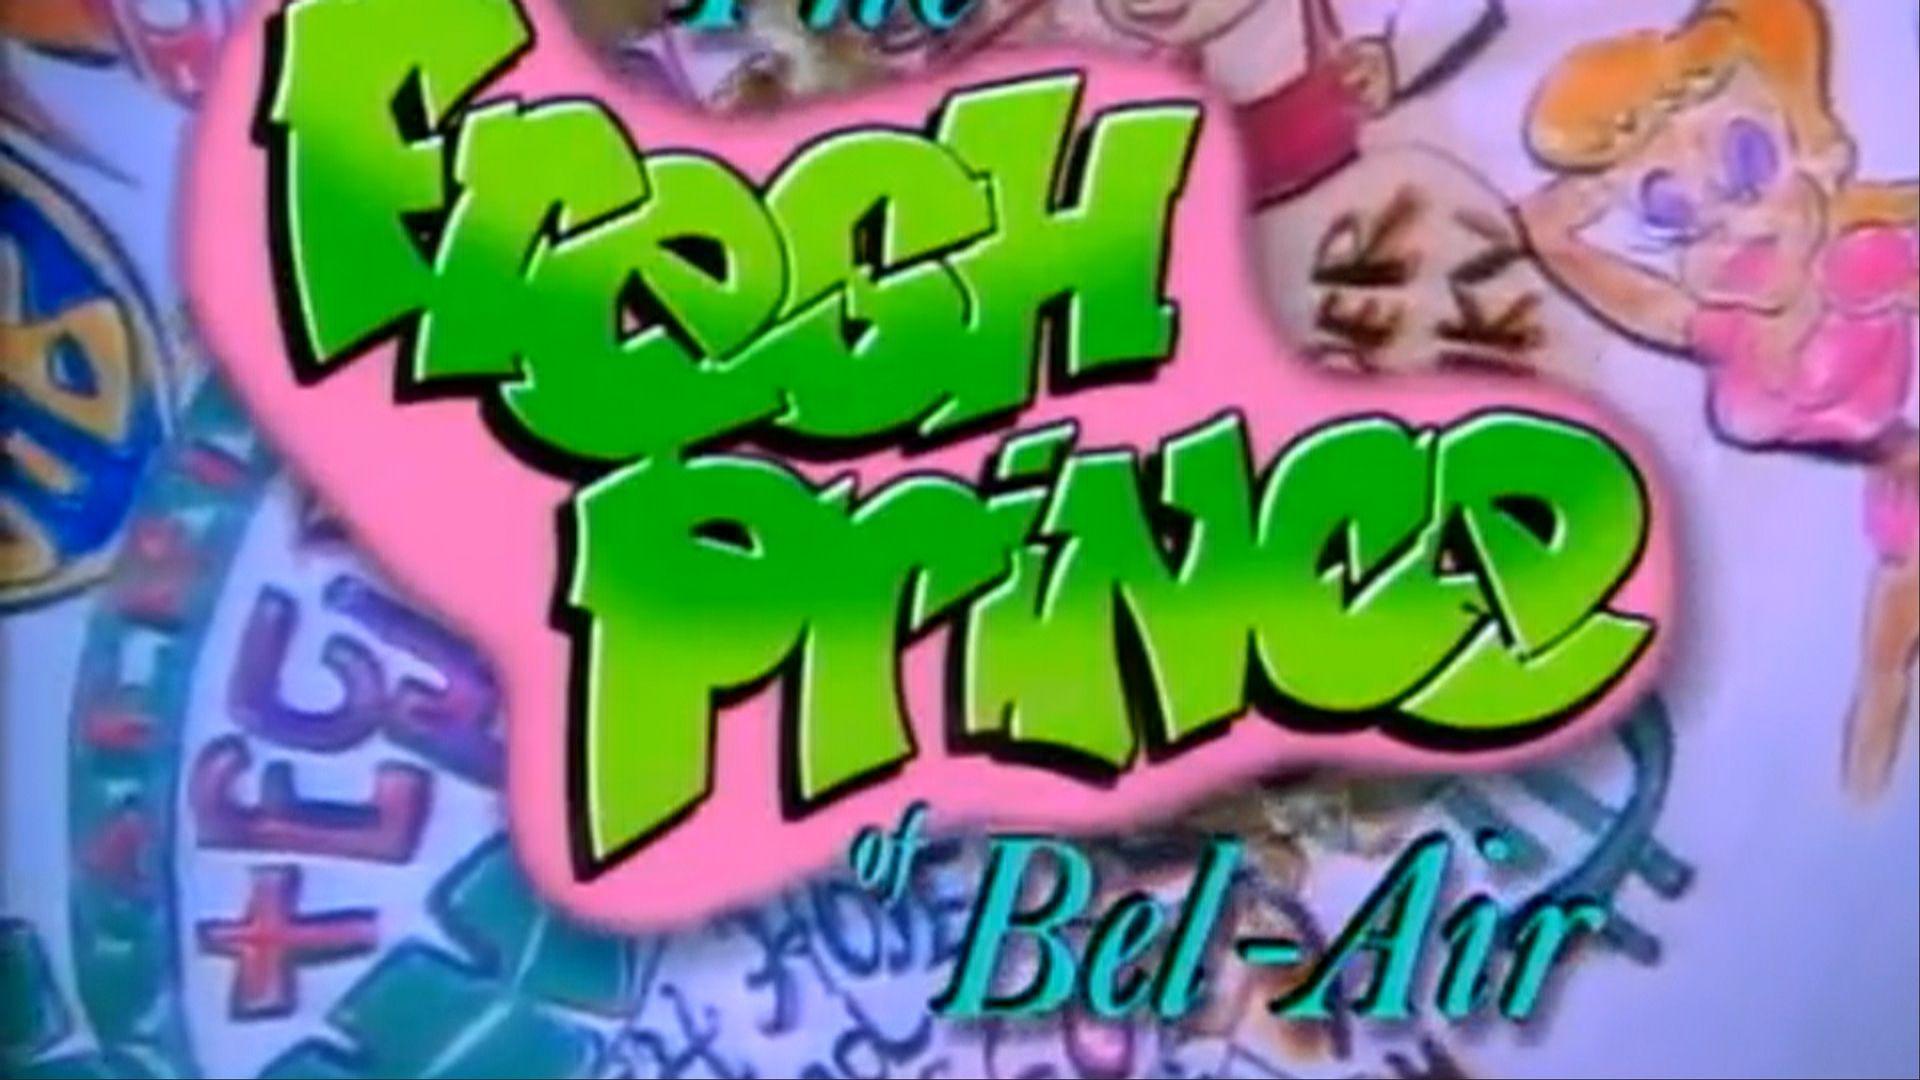 Fresh Prince of Bel Air' reboot being developed